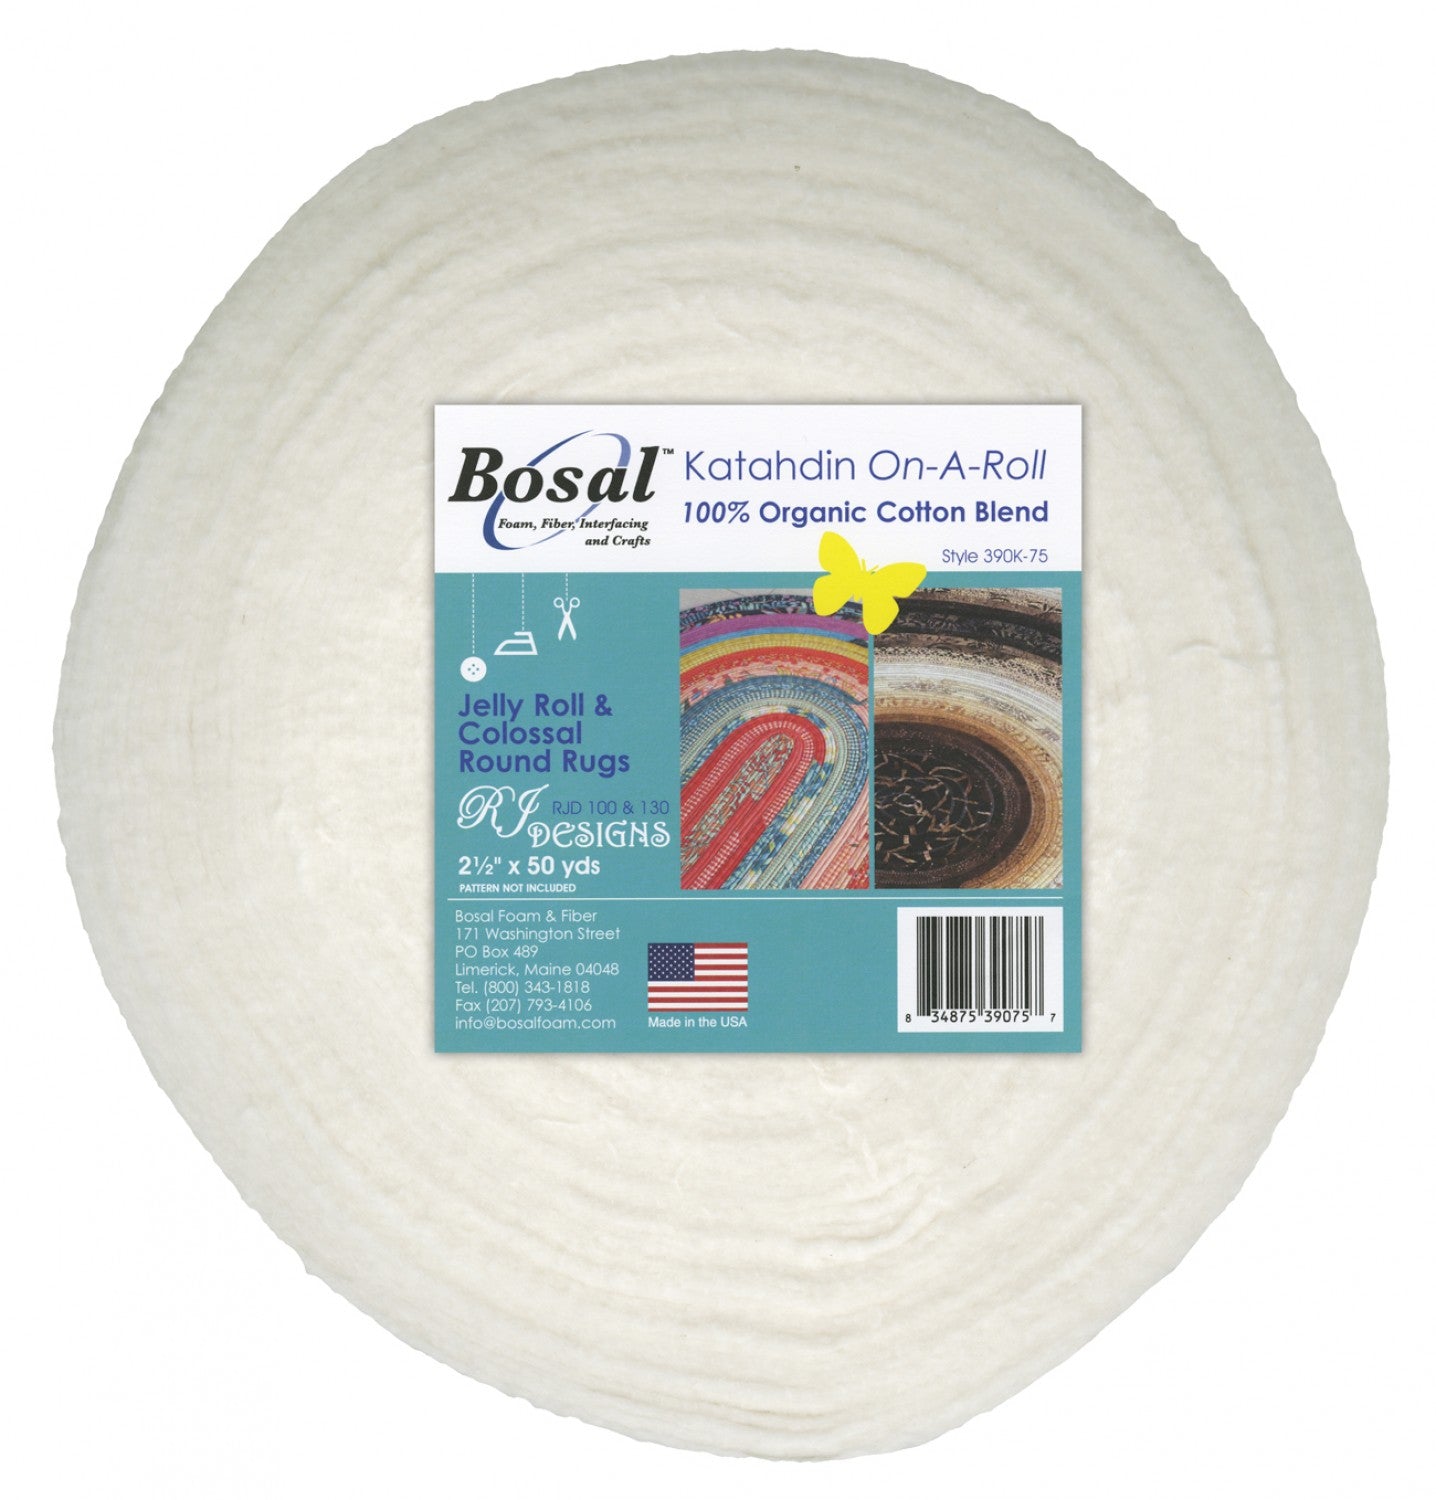 Bosal Katahdin 100% Organic Cotton Blend Batting On A Roll 2.5 inches x 50 Yards